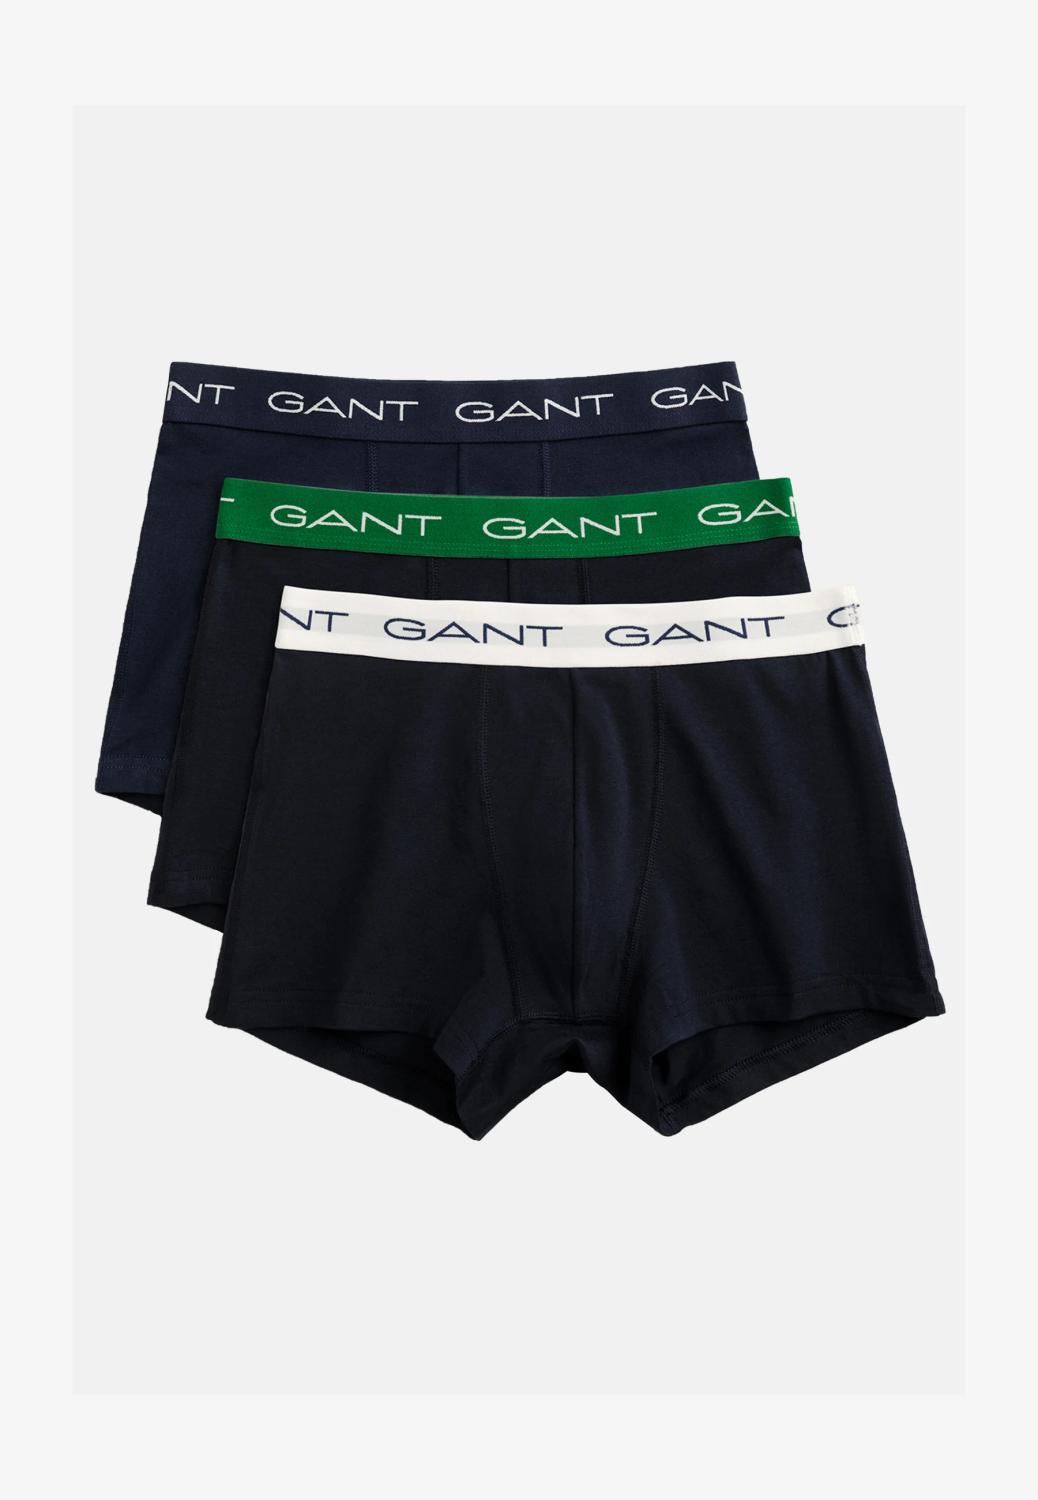 Gant 3-Pack Trunk Cotton Stretch